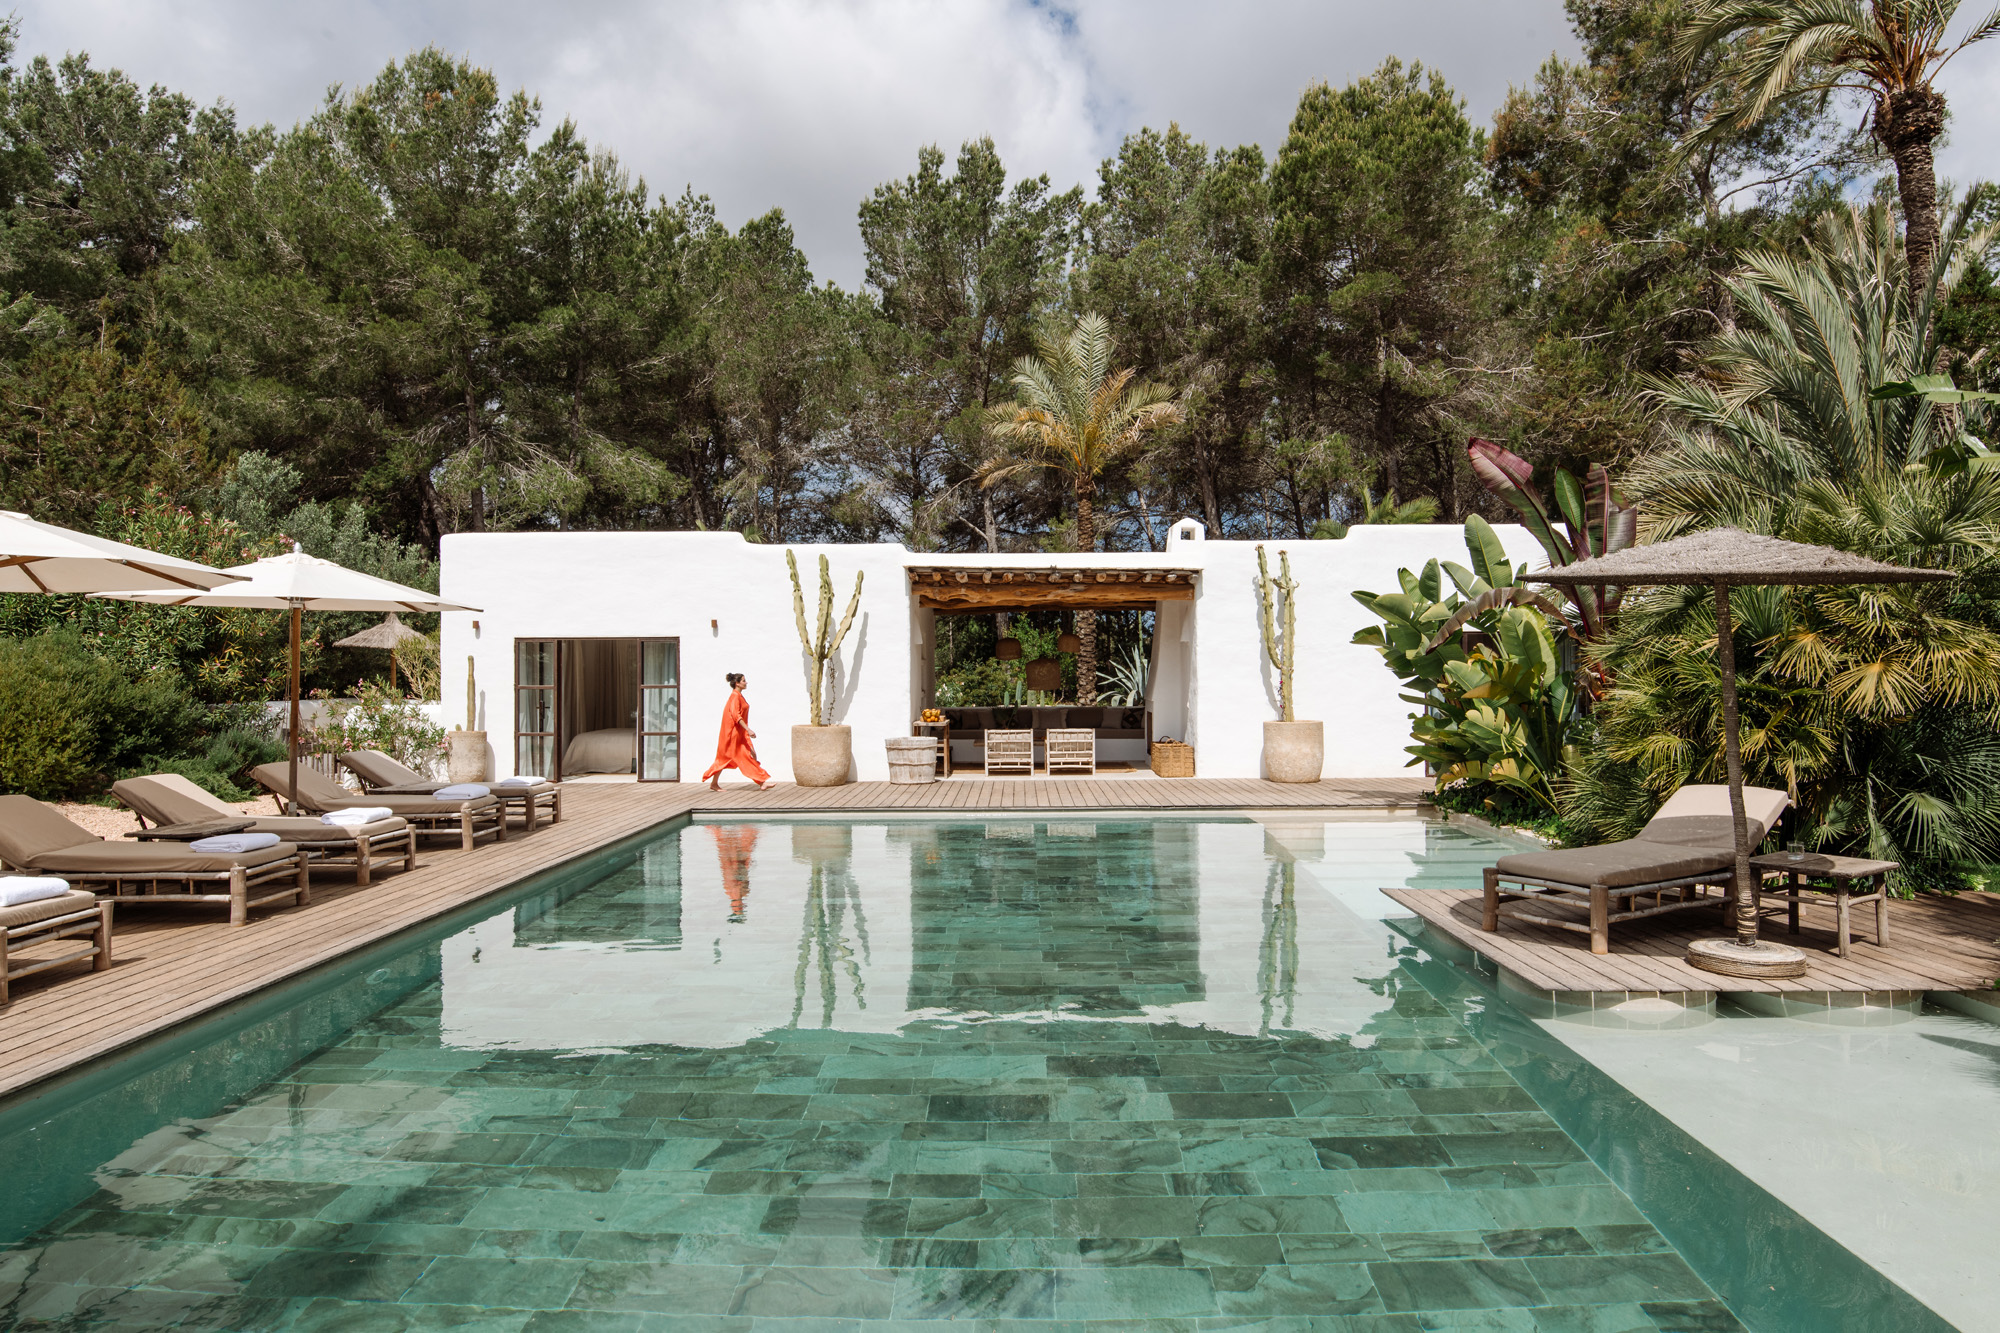 Pool by Jungle Studios - modern landscape design practice in Ibiza